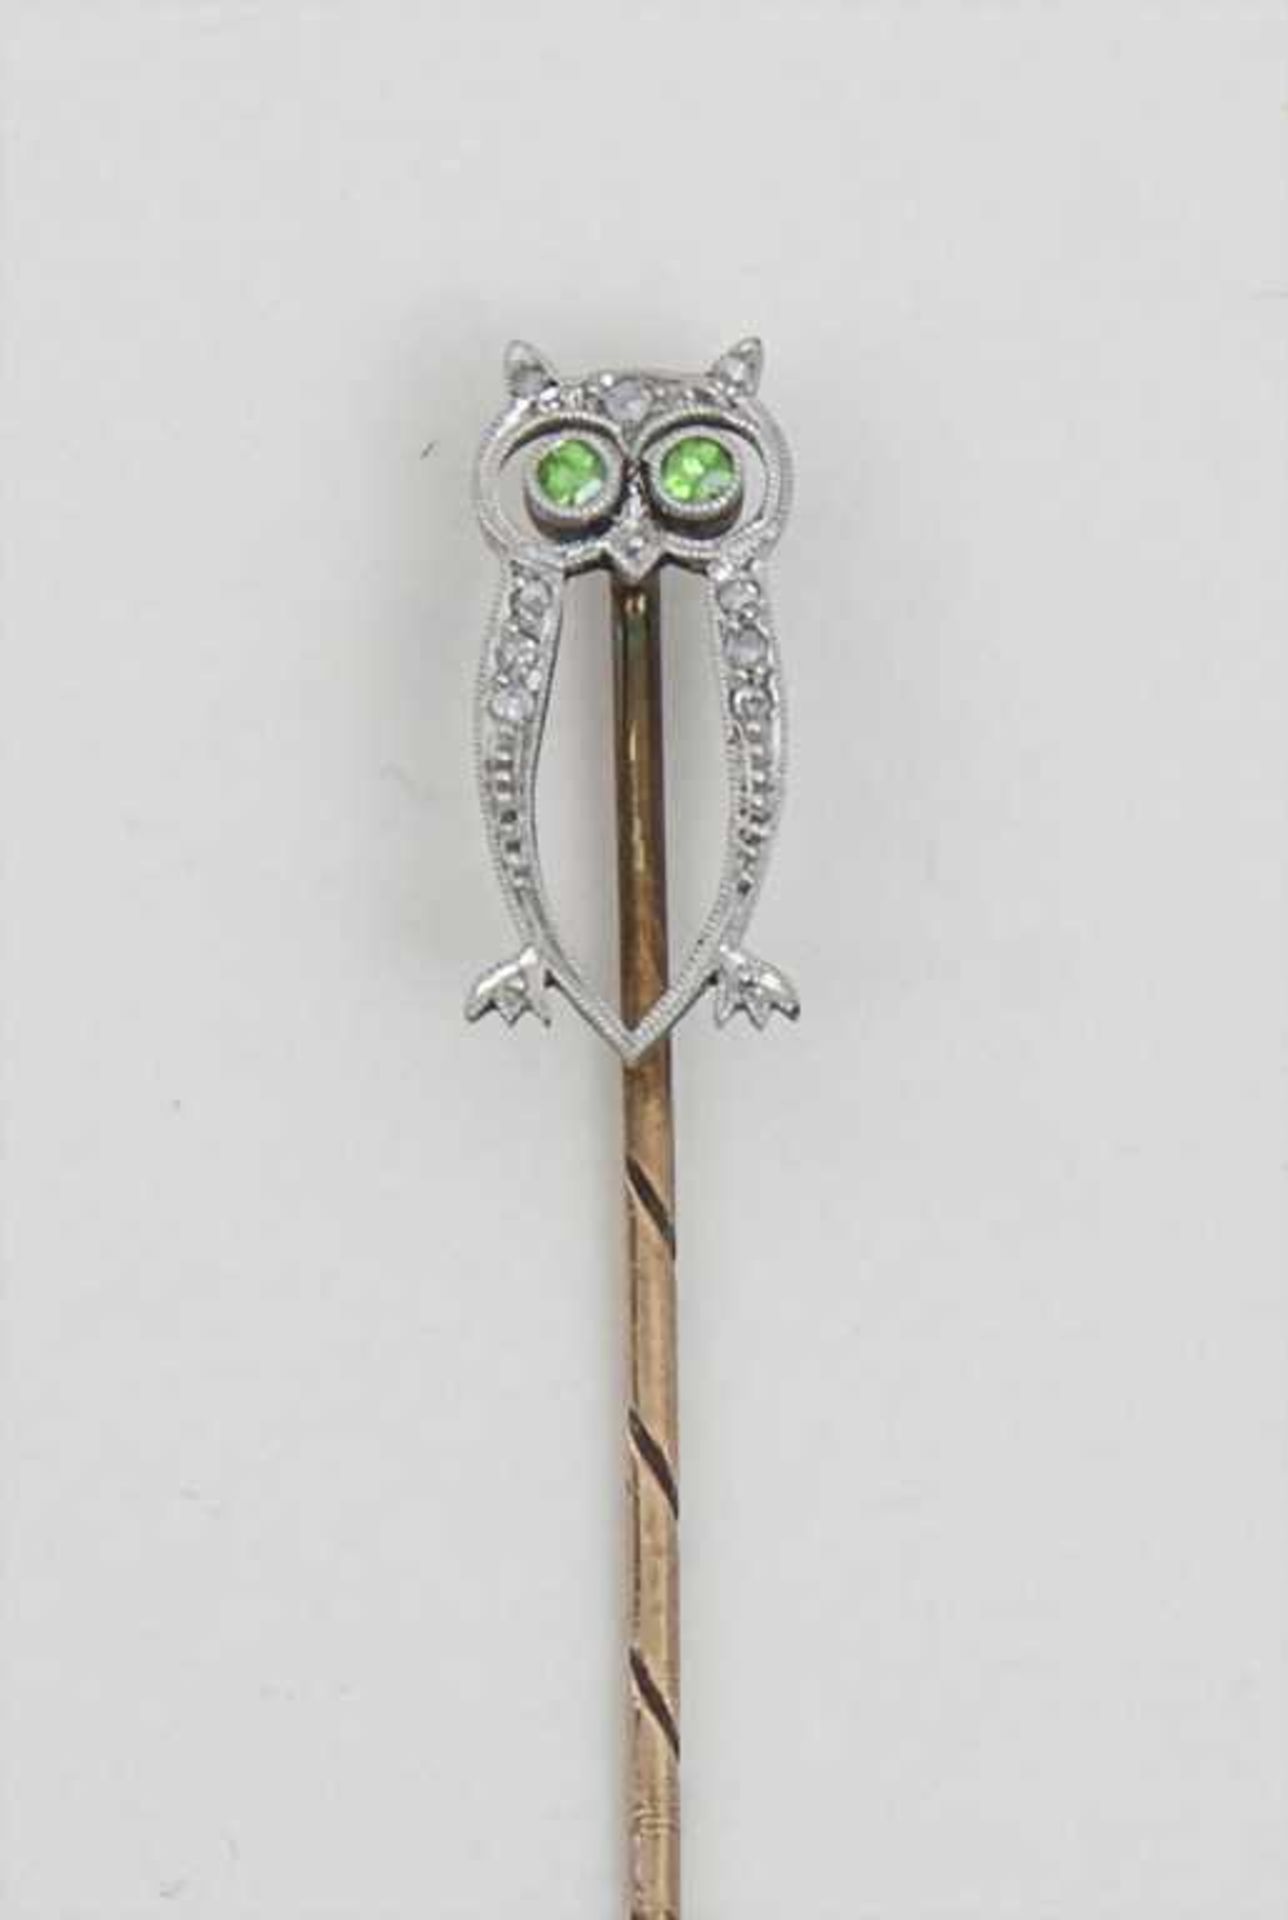 Anstecknadel Eule / A Tiepin Owl, um 1900 Material: RG 14 Kt 585/000 u. Platin, 9 kl. Diamant, 2